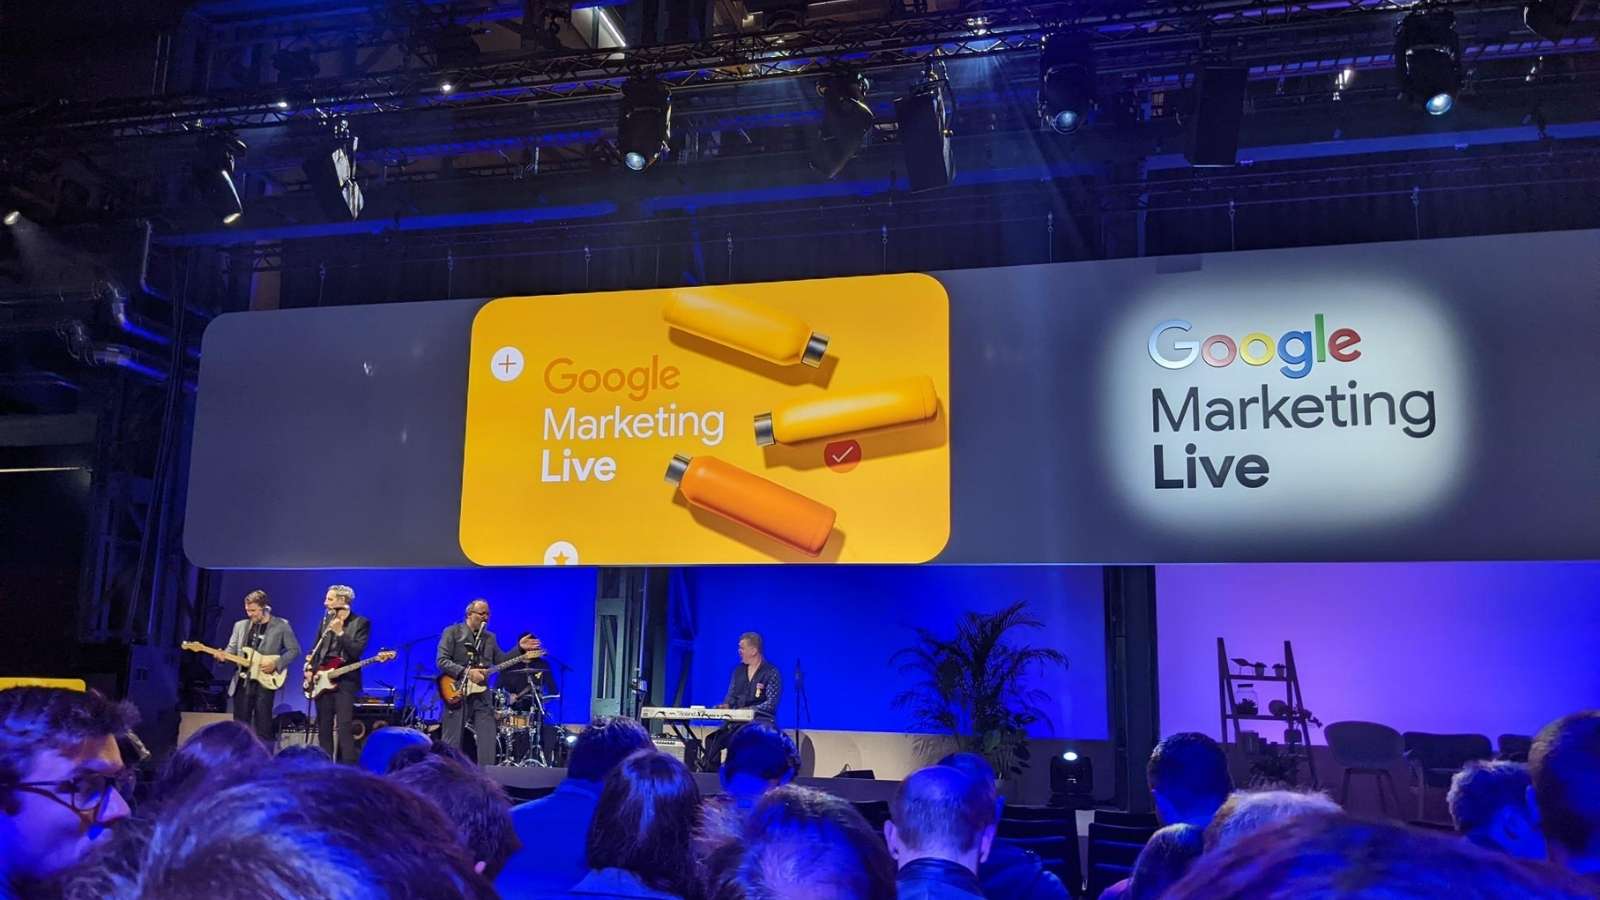 Google Marketing Live stage 2022